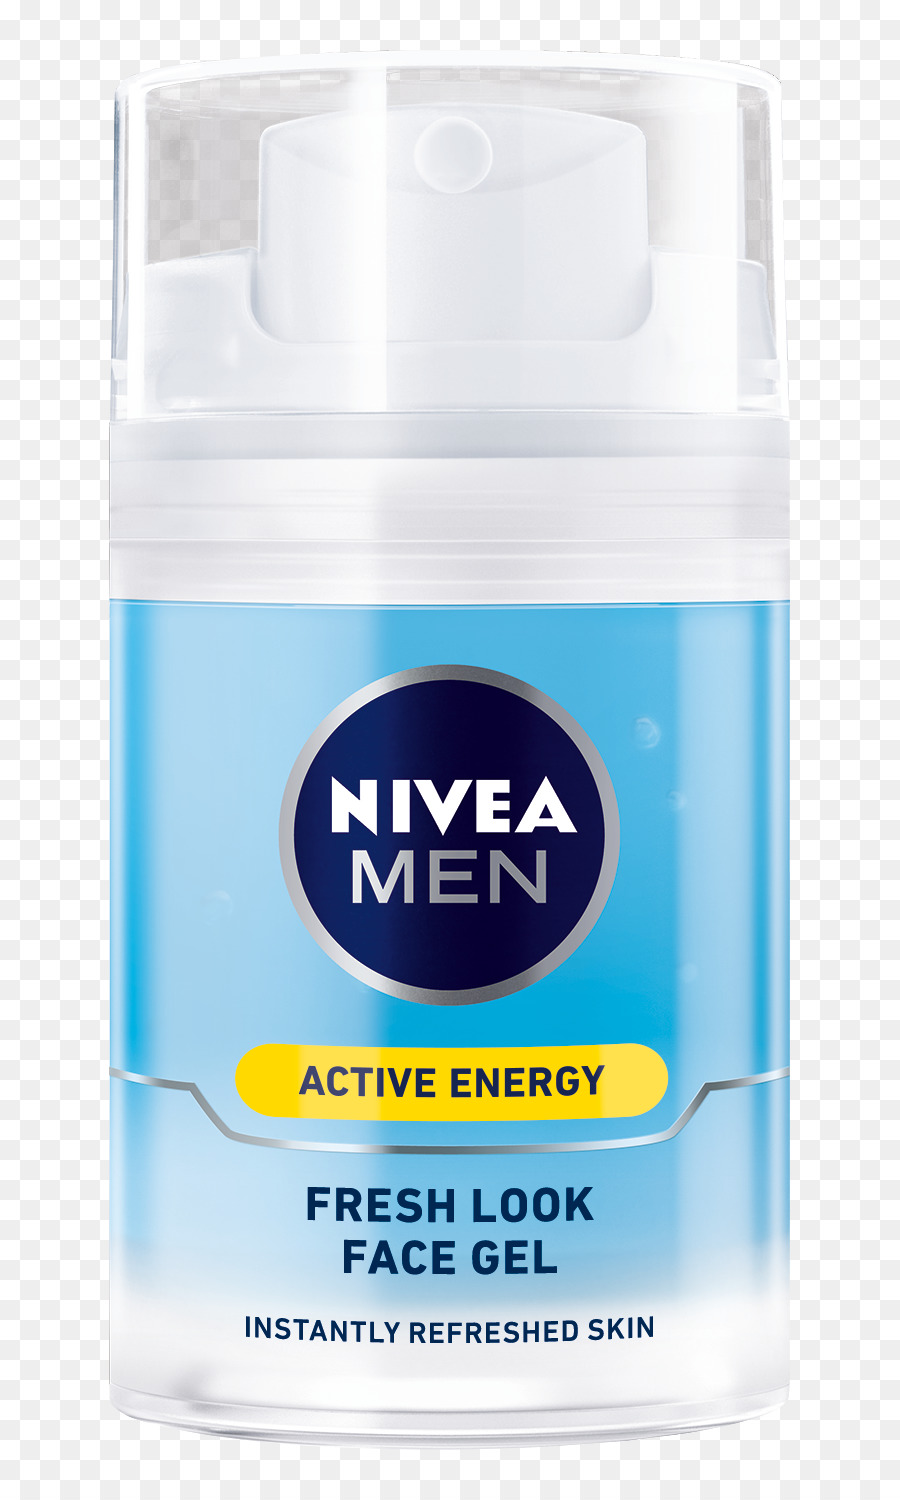 NIVEA Men Active Energy Gesichtspflege creme Cleanser Face Gel - Gesicht